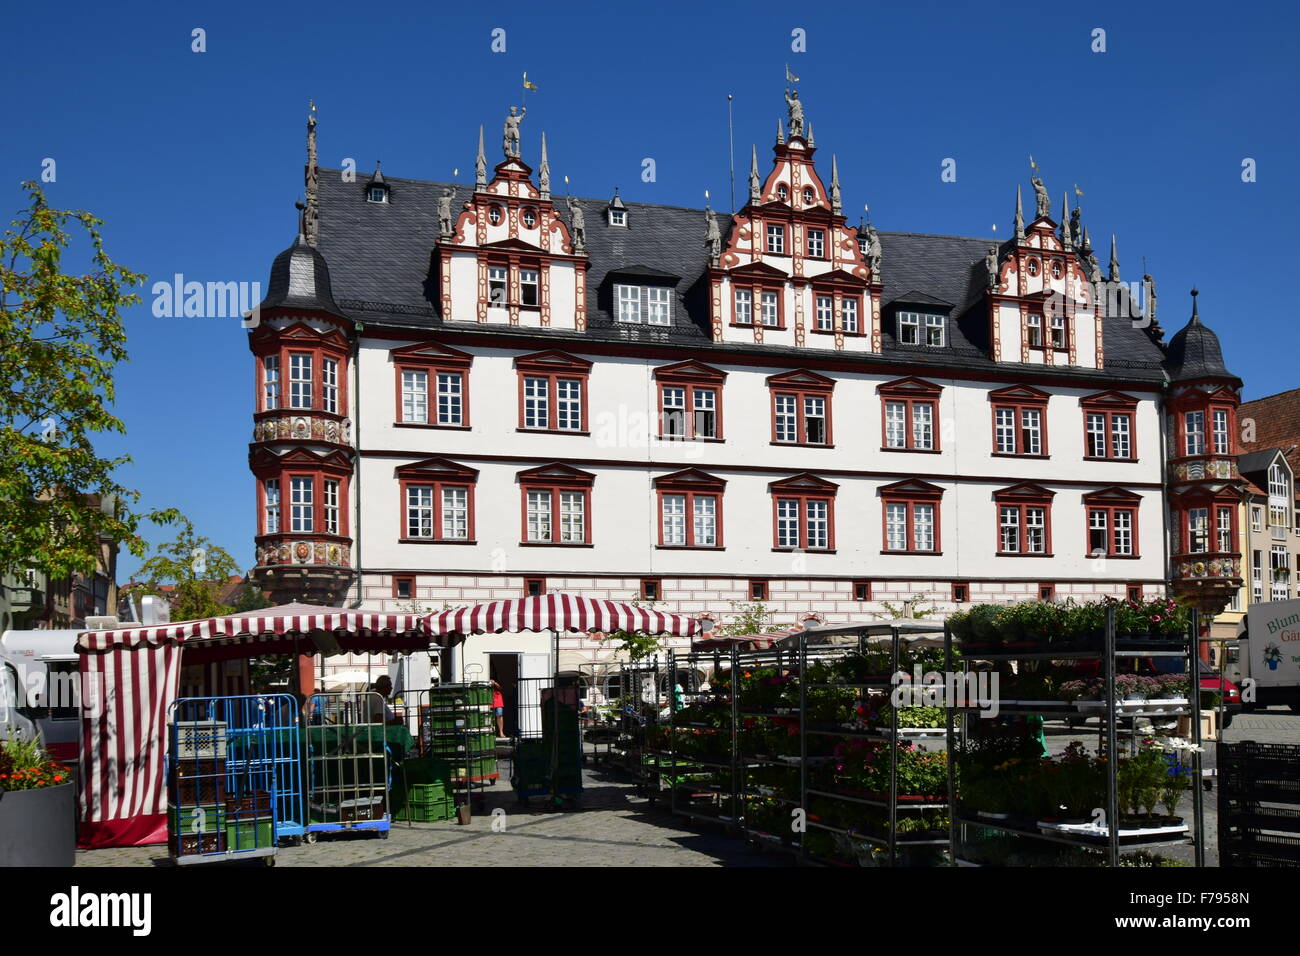 Coburg, Bavaria, region Upper Franconia, Germany - Arts and architecture Stock Photo